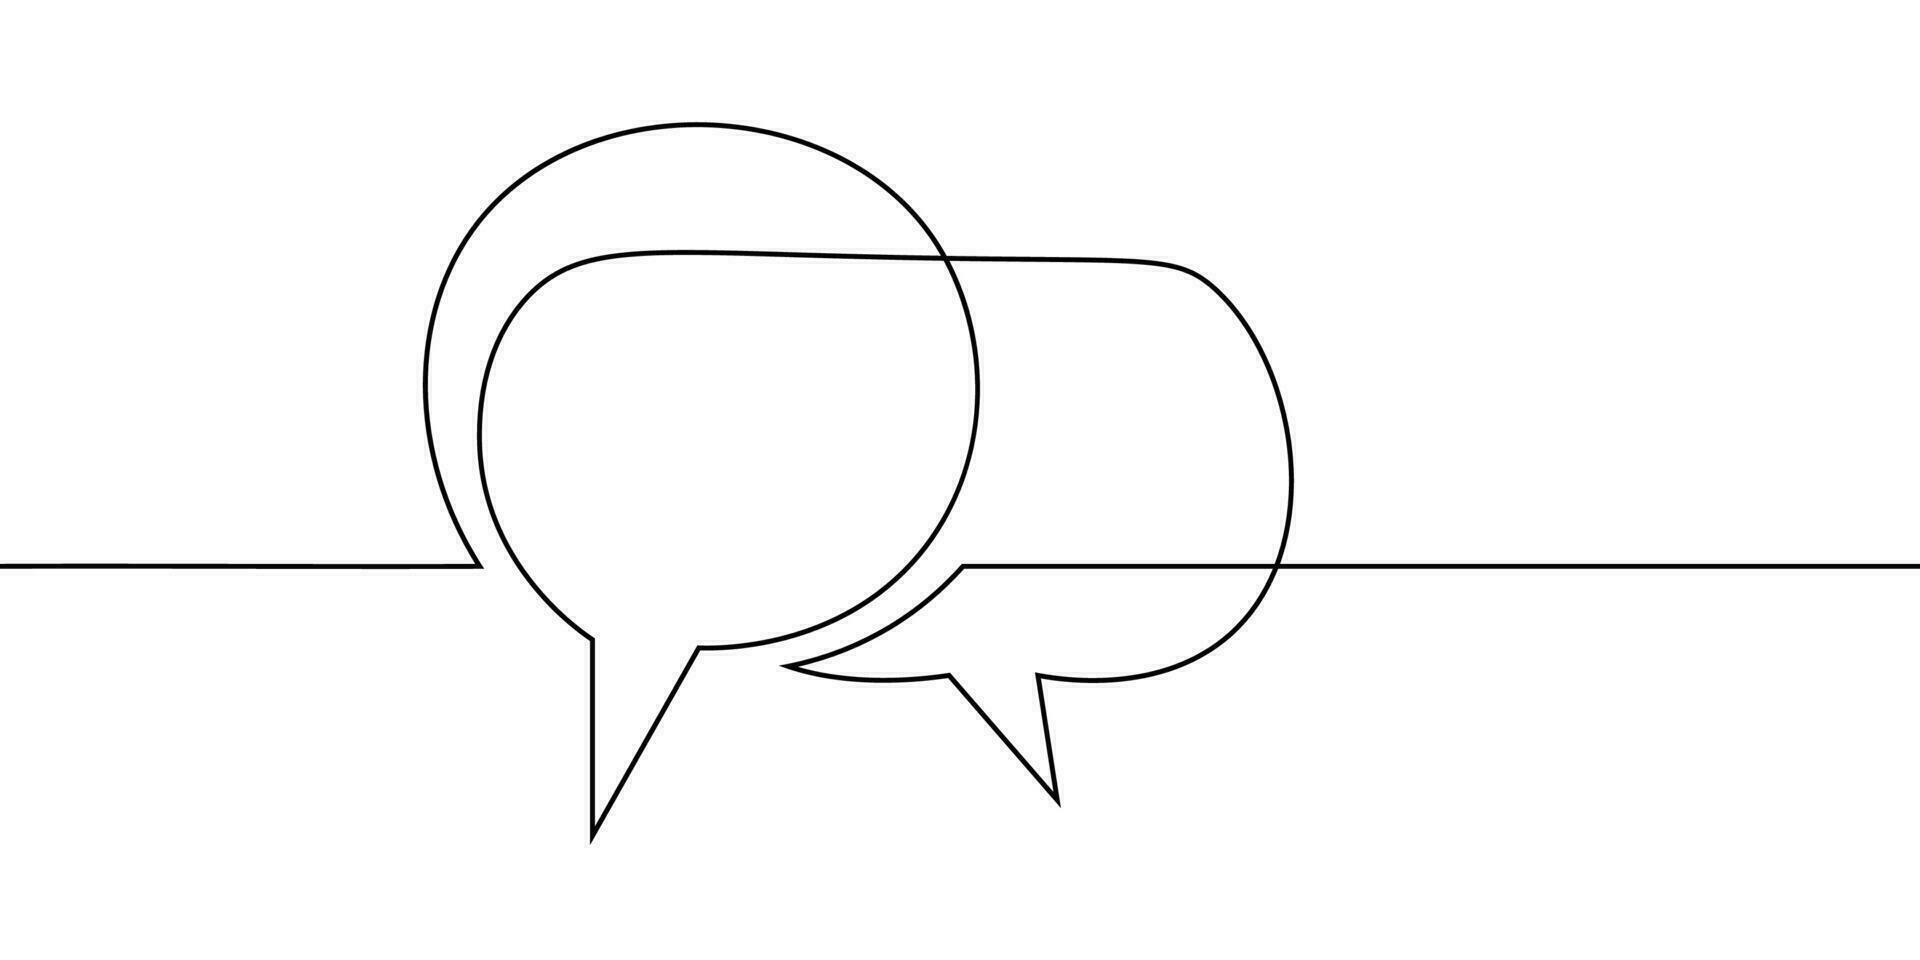 Speech bubble continuous one line art. Drawing dialogue speech bubble illustration. Continuous one line border text box, message element. Vector